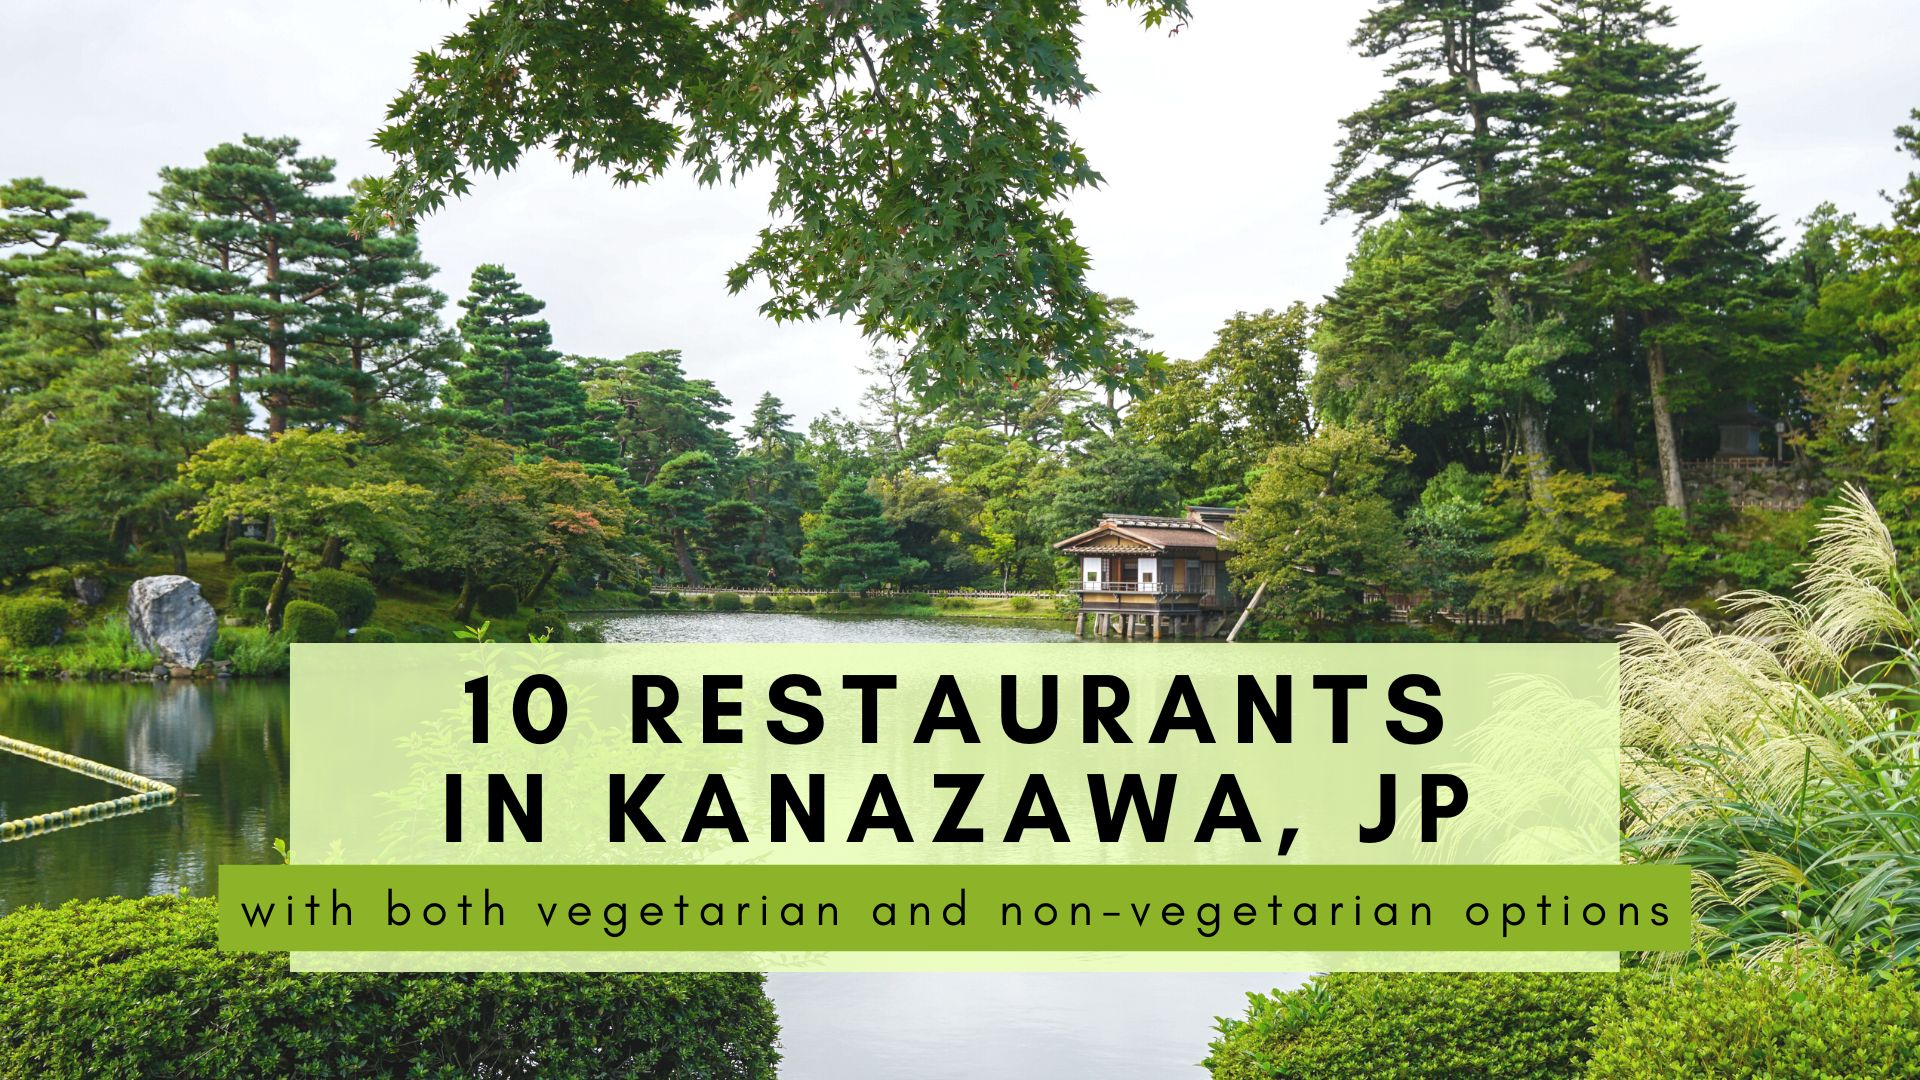 Kanazawa restaurants with vegetarian options, Kanazawa Japan vegetarian restaurants, Where to eat in Kanazawa with vegetarian and non-vegetarian options